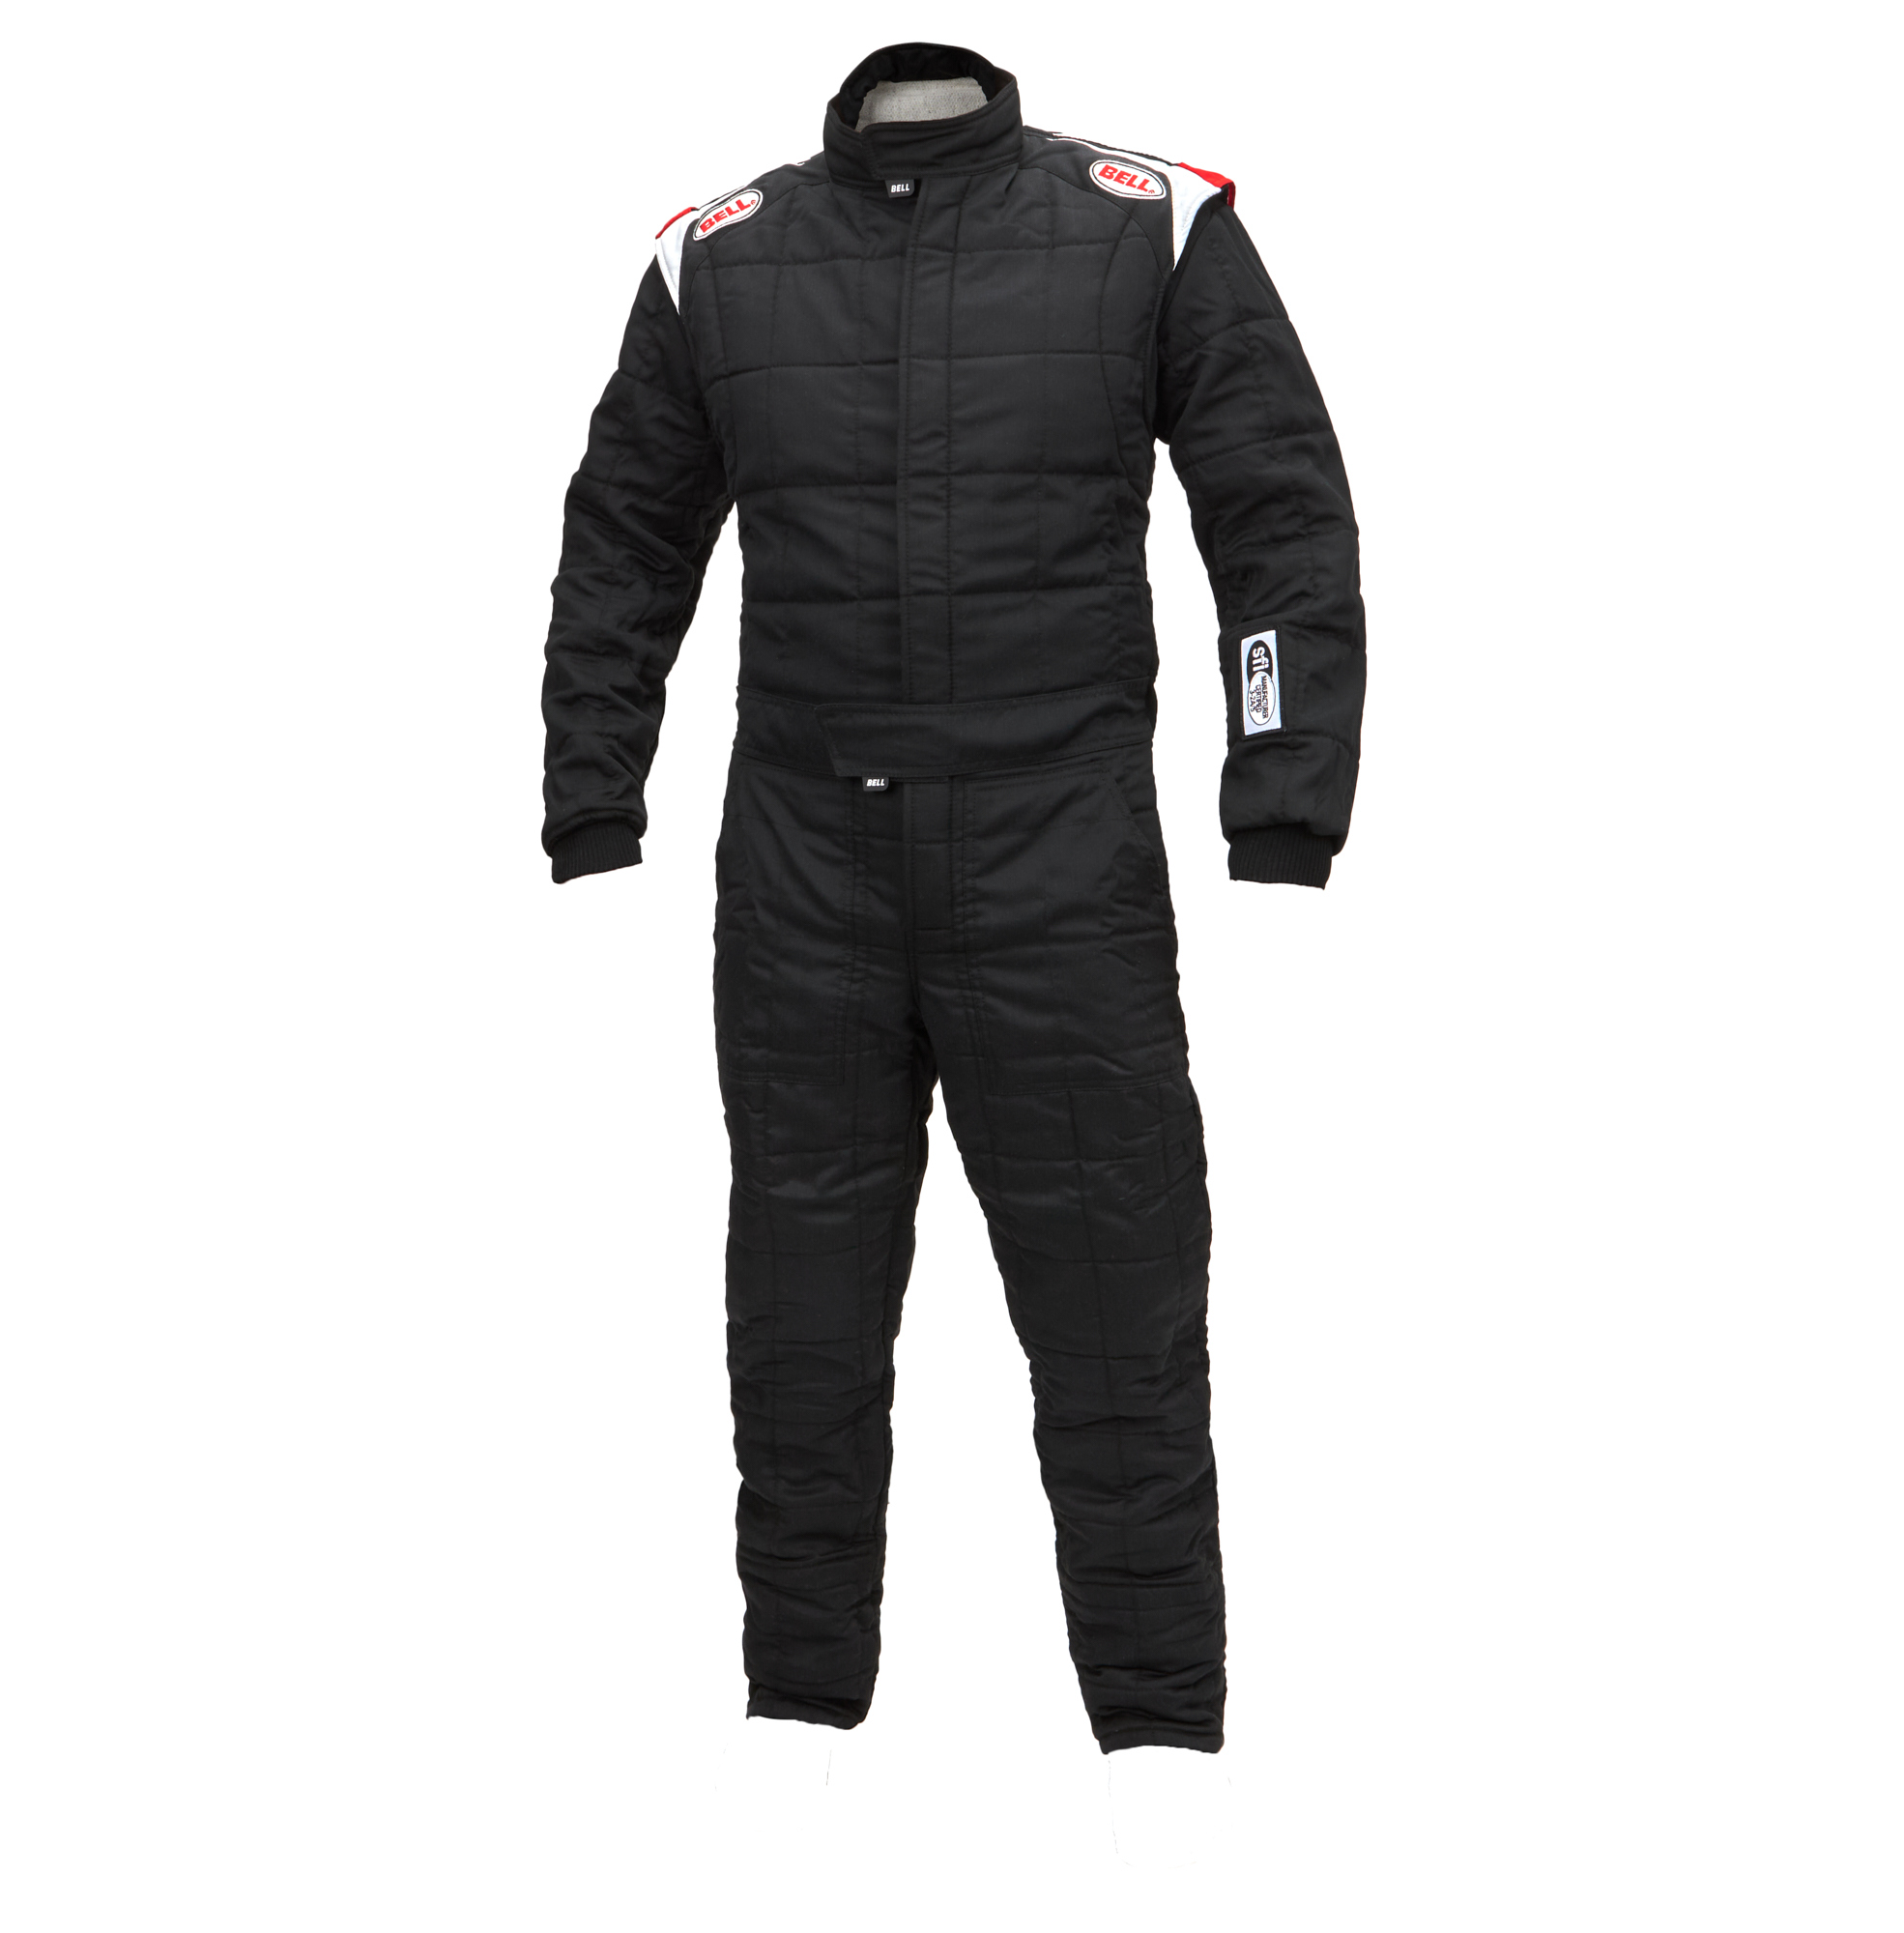 Bell Sport-TX Suit Black 2X Large (62-64) SFI 3.2A/5 - BR10065